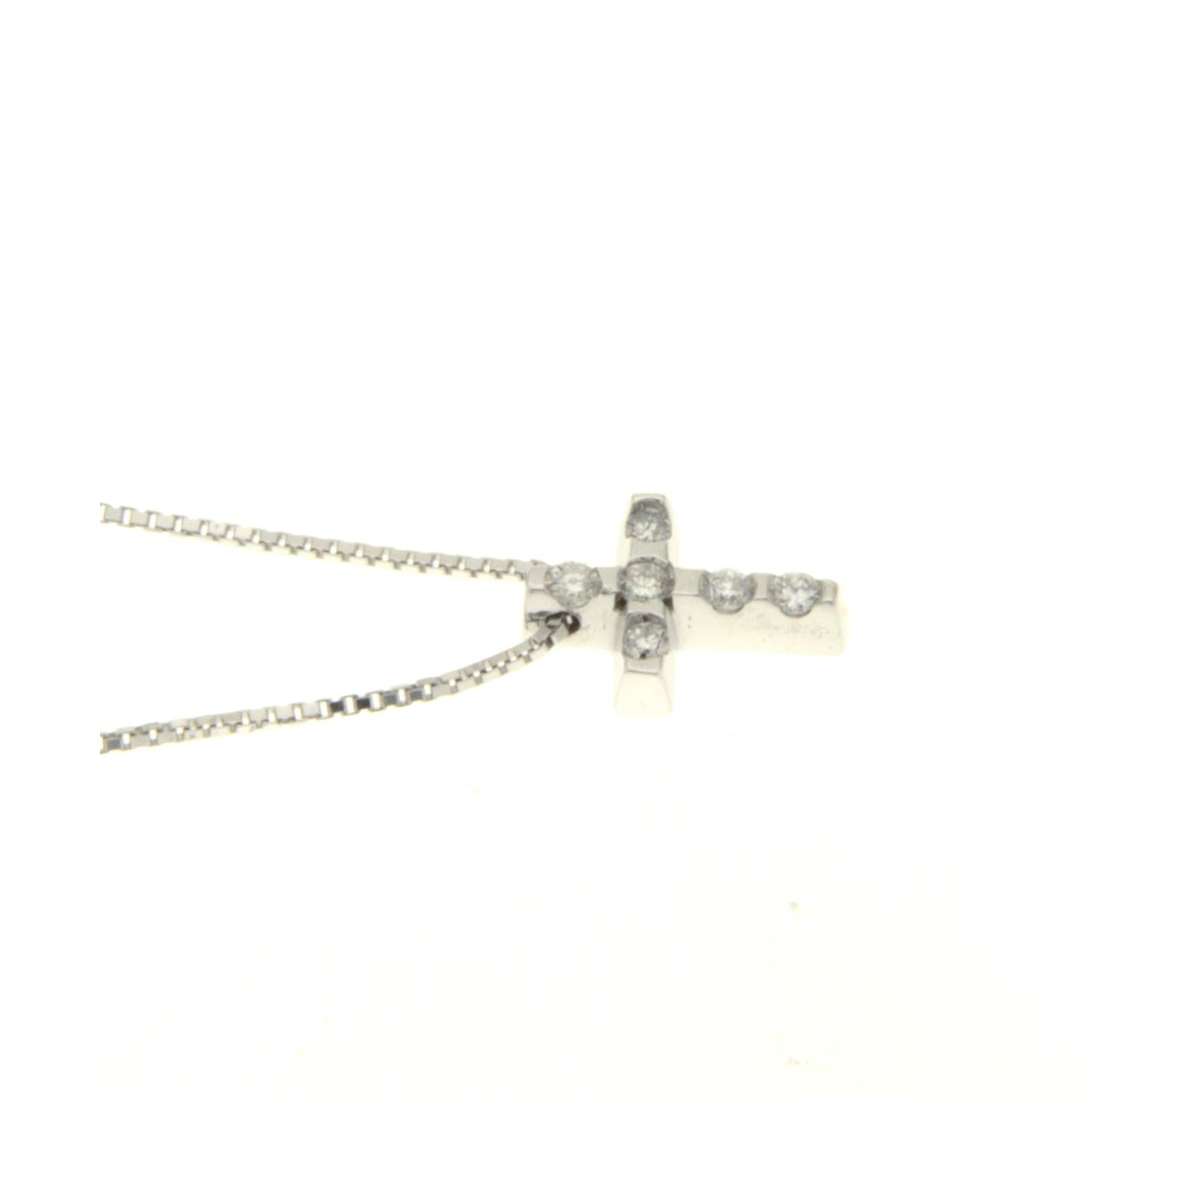 Cross necklace 0.07 carats diamonds G-VS1